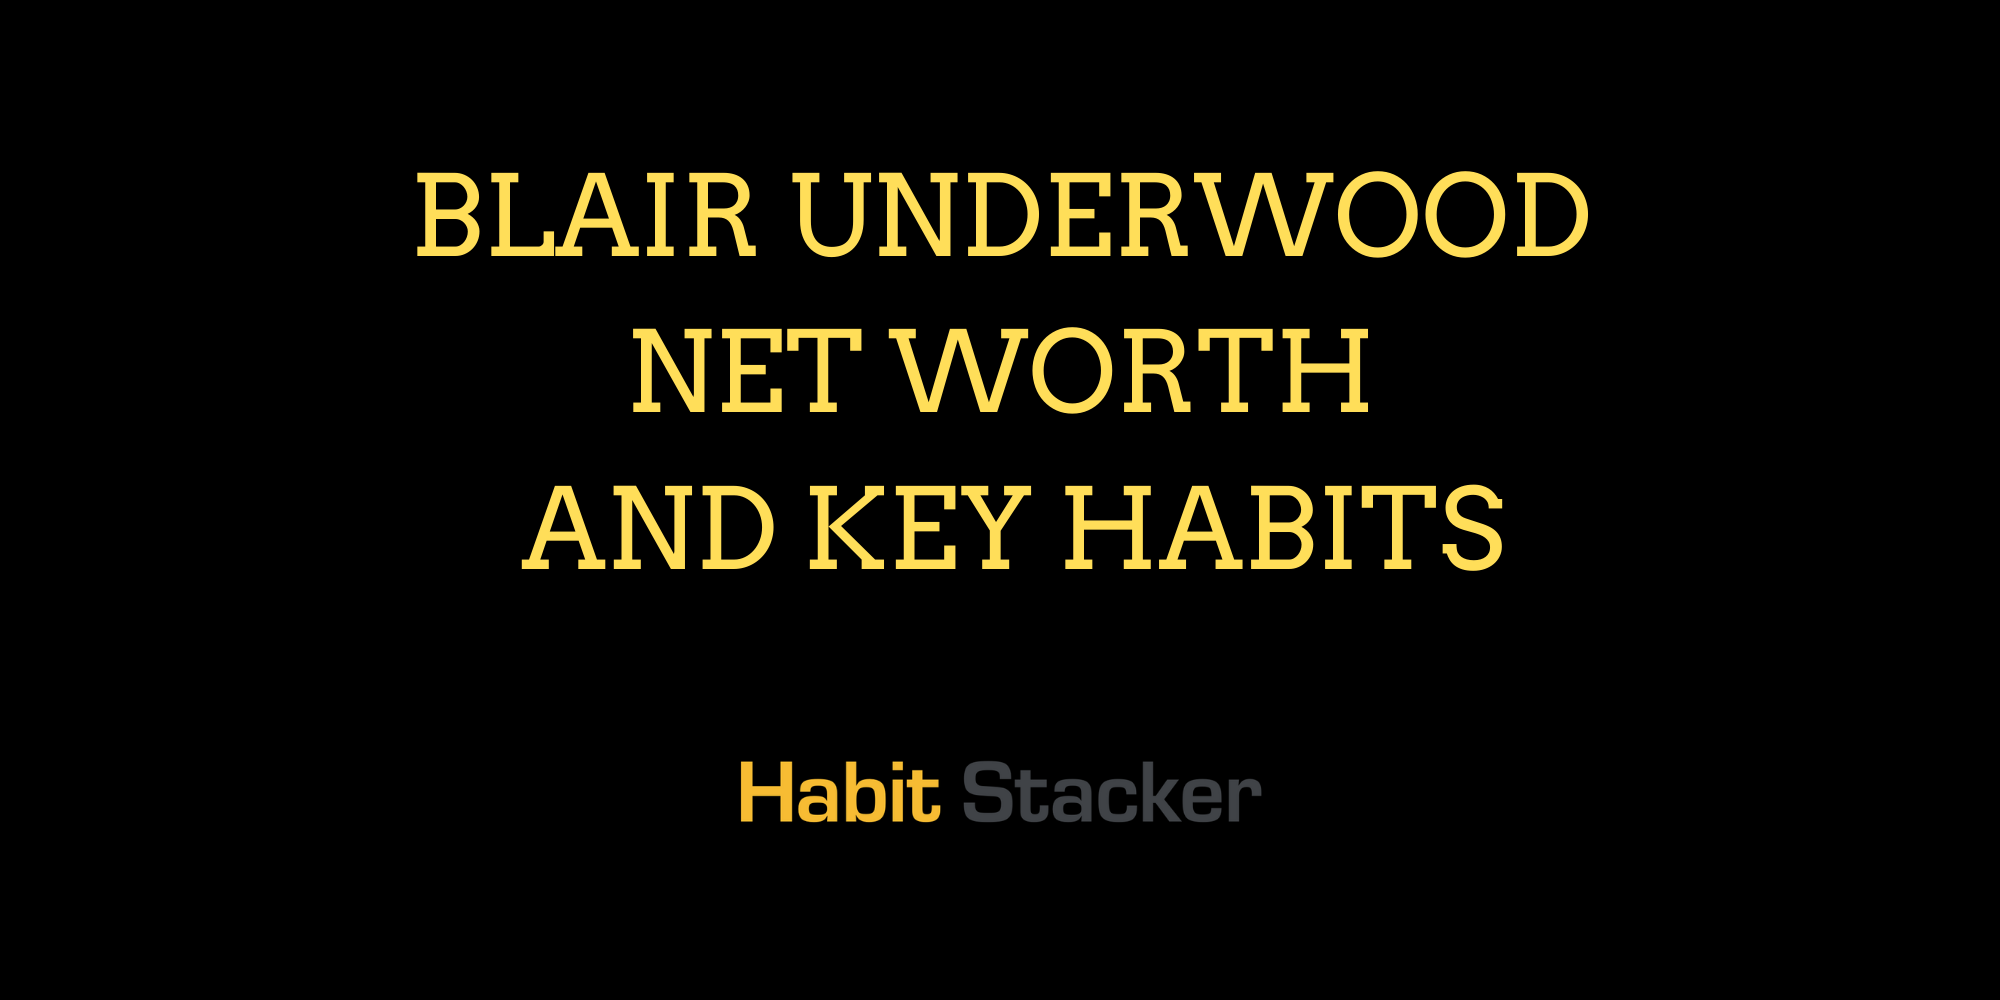 Blair Underwood Net Worth and Key Habits